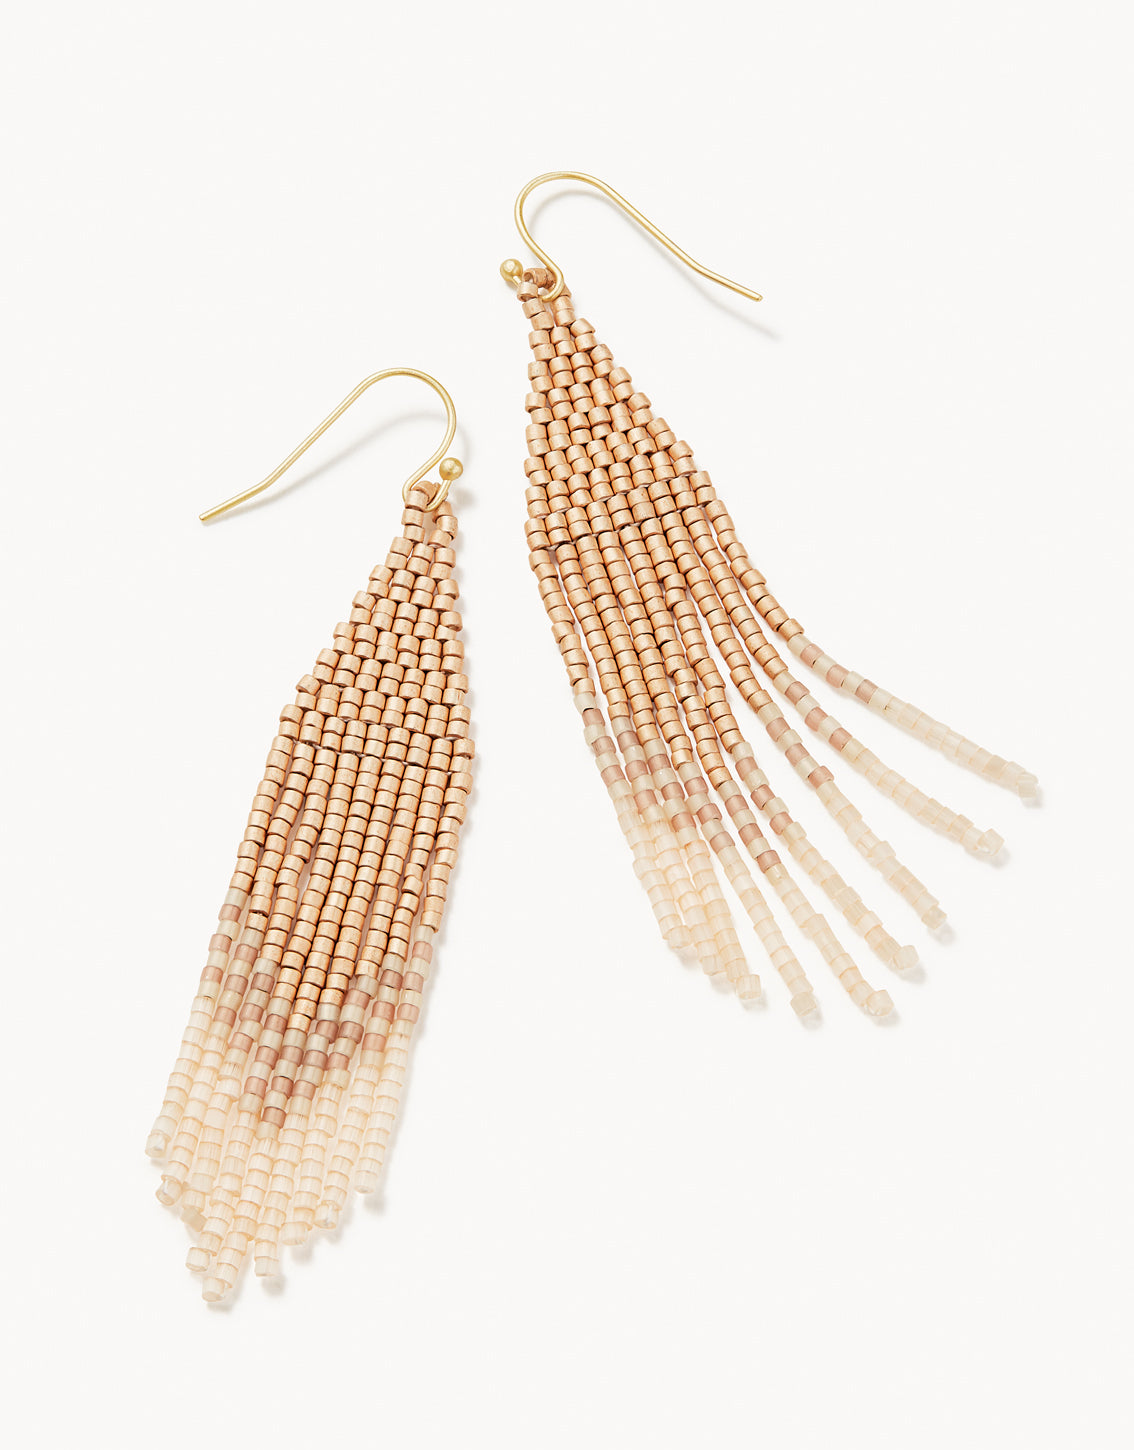 Bitty Bead Earrings Gold/Blush